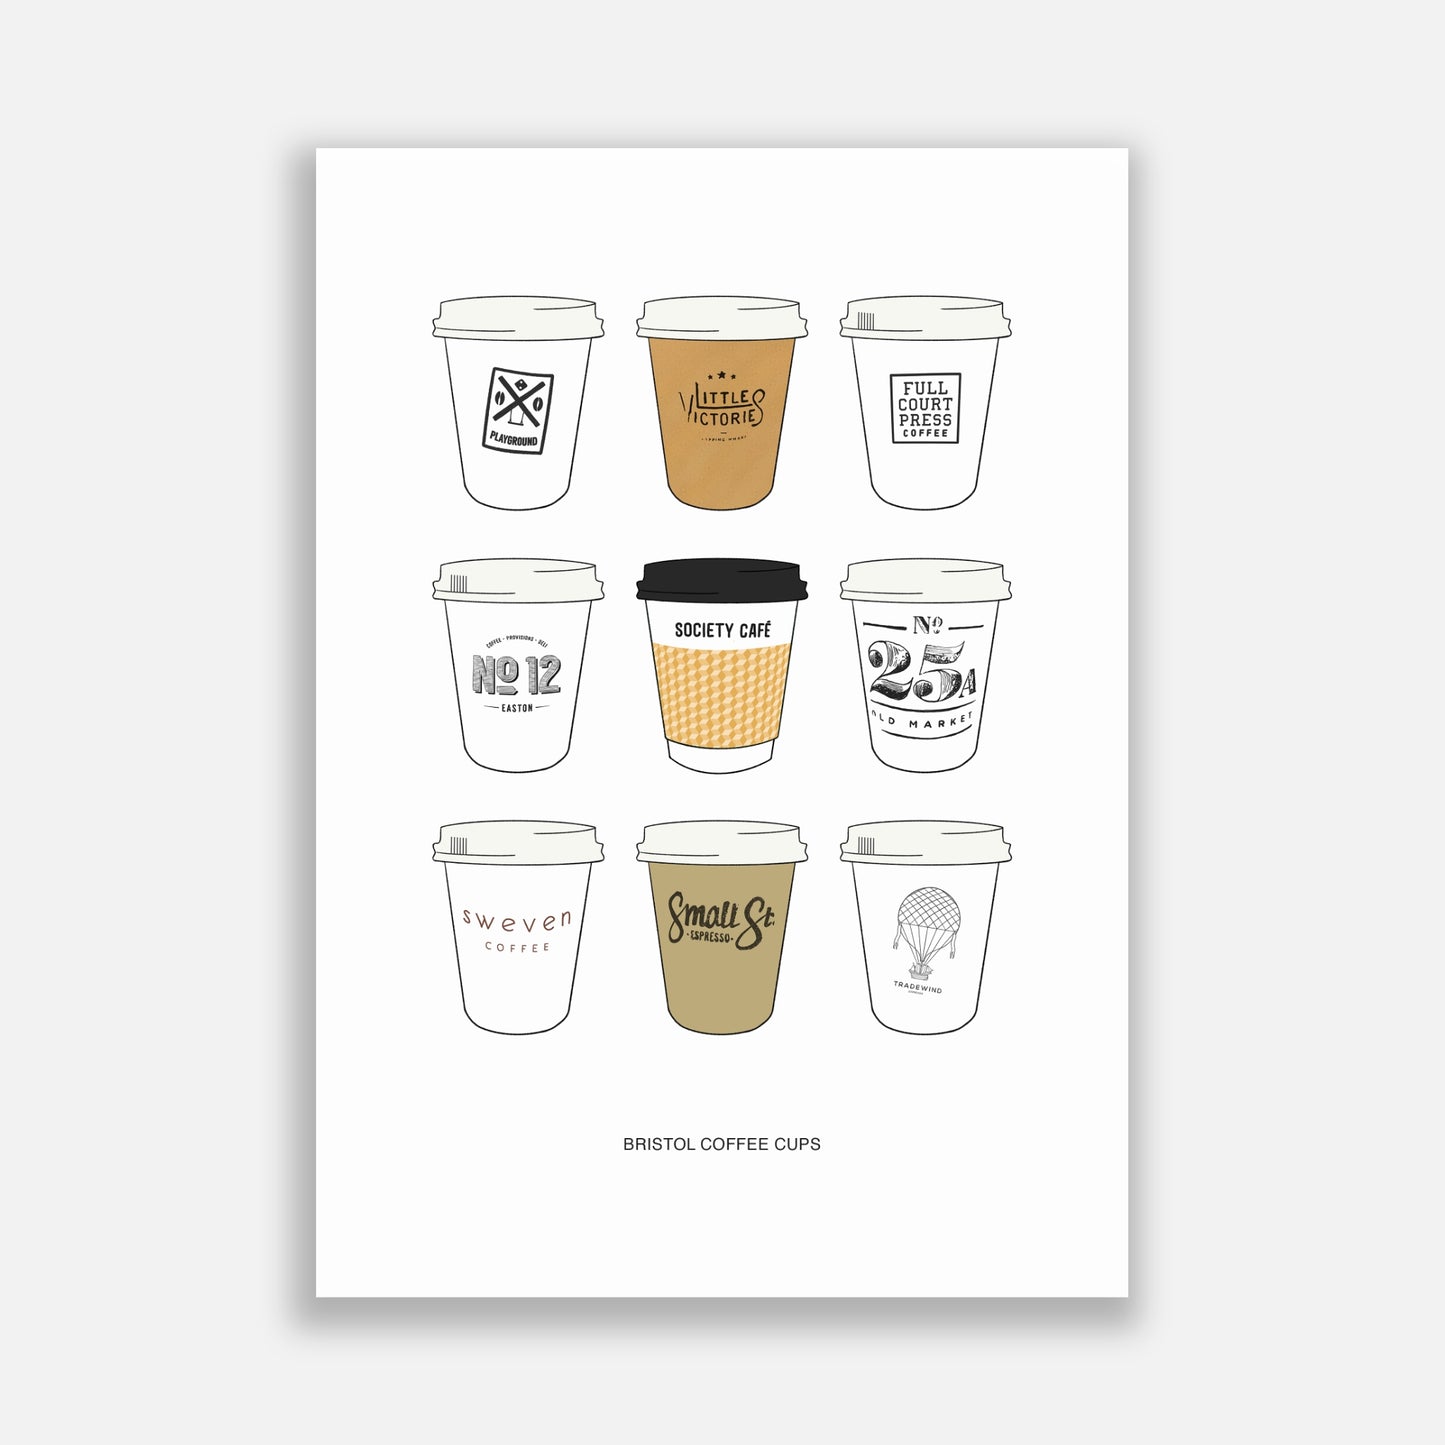 Bristol Coffee Cups